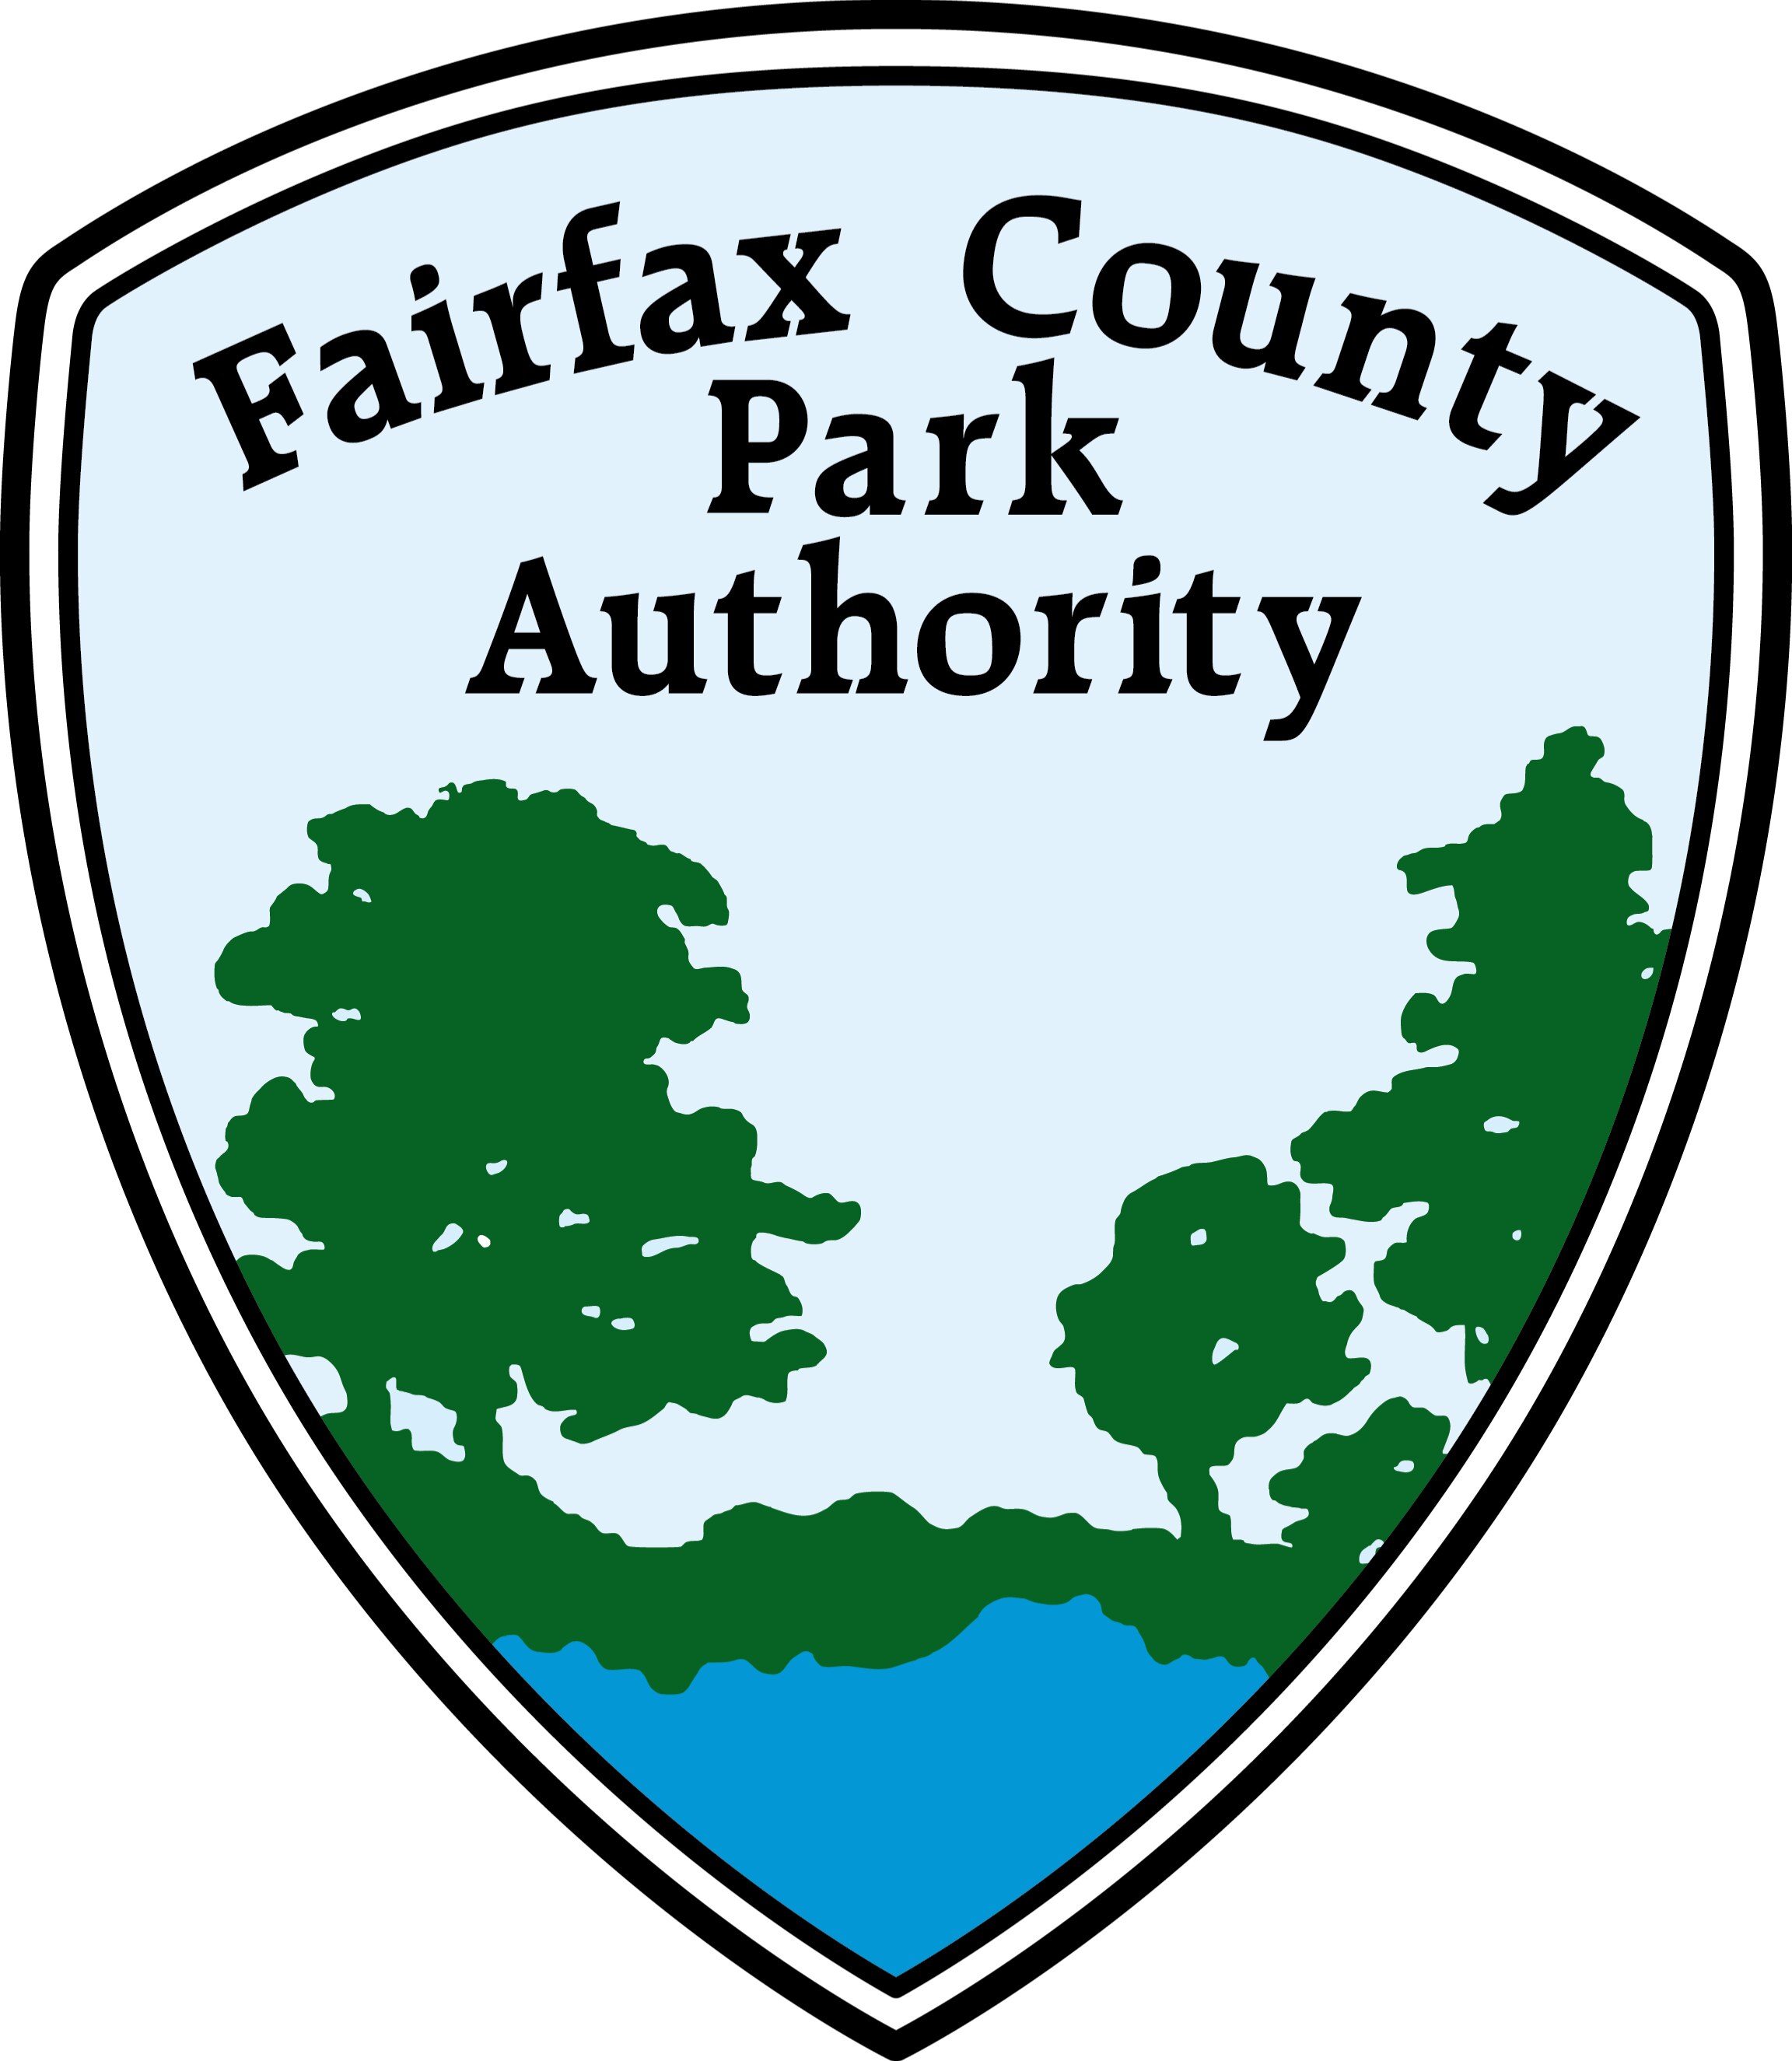 Fairfax County Park Authority shield logo